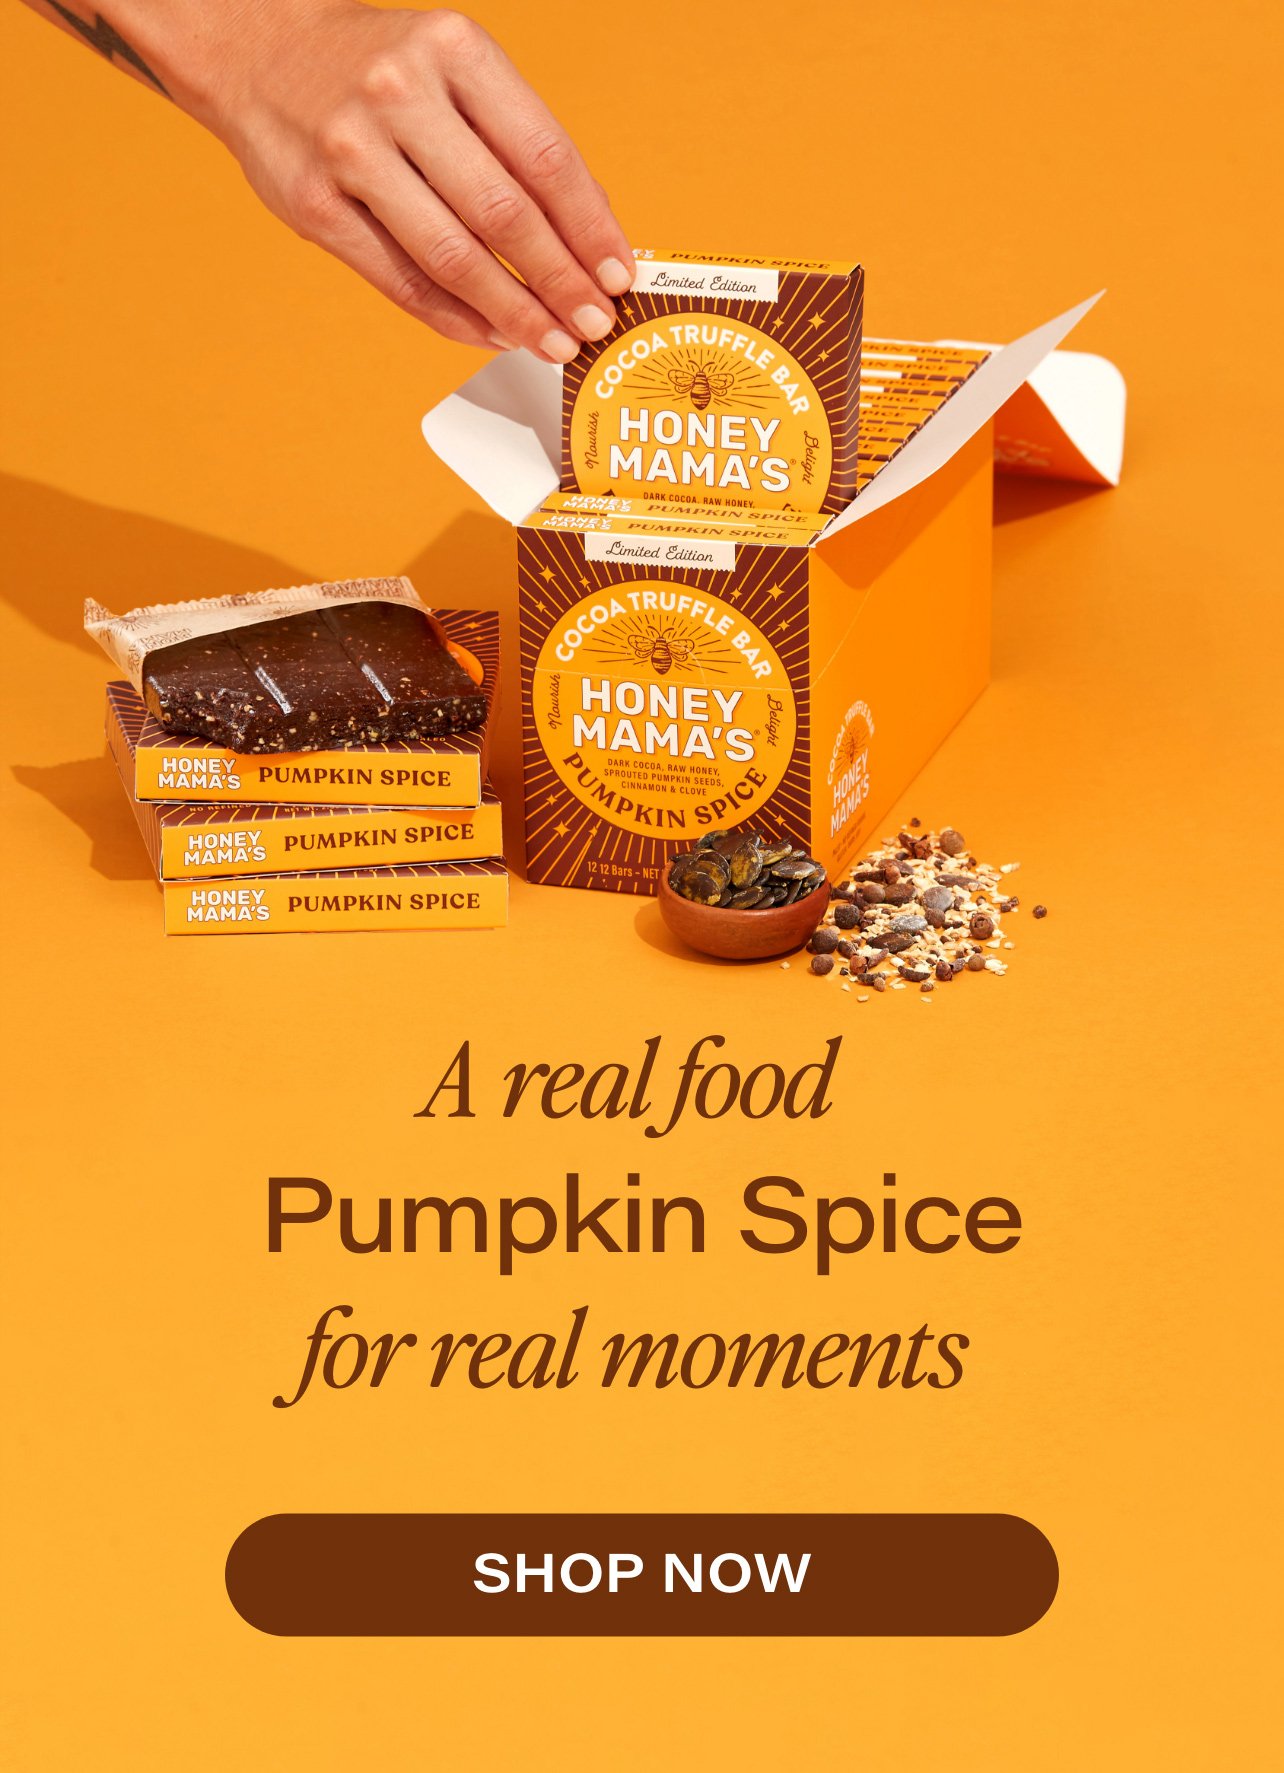 Honey Mama's to bring back Pumpkin Spice truffle bars